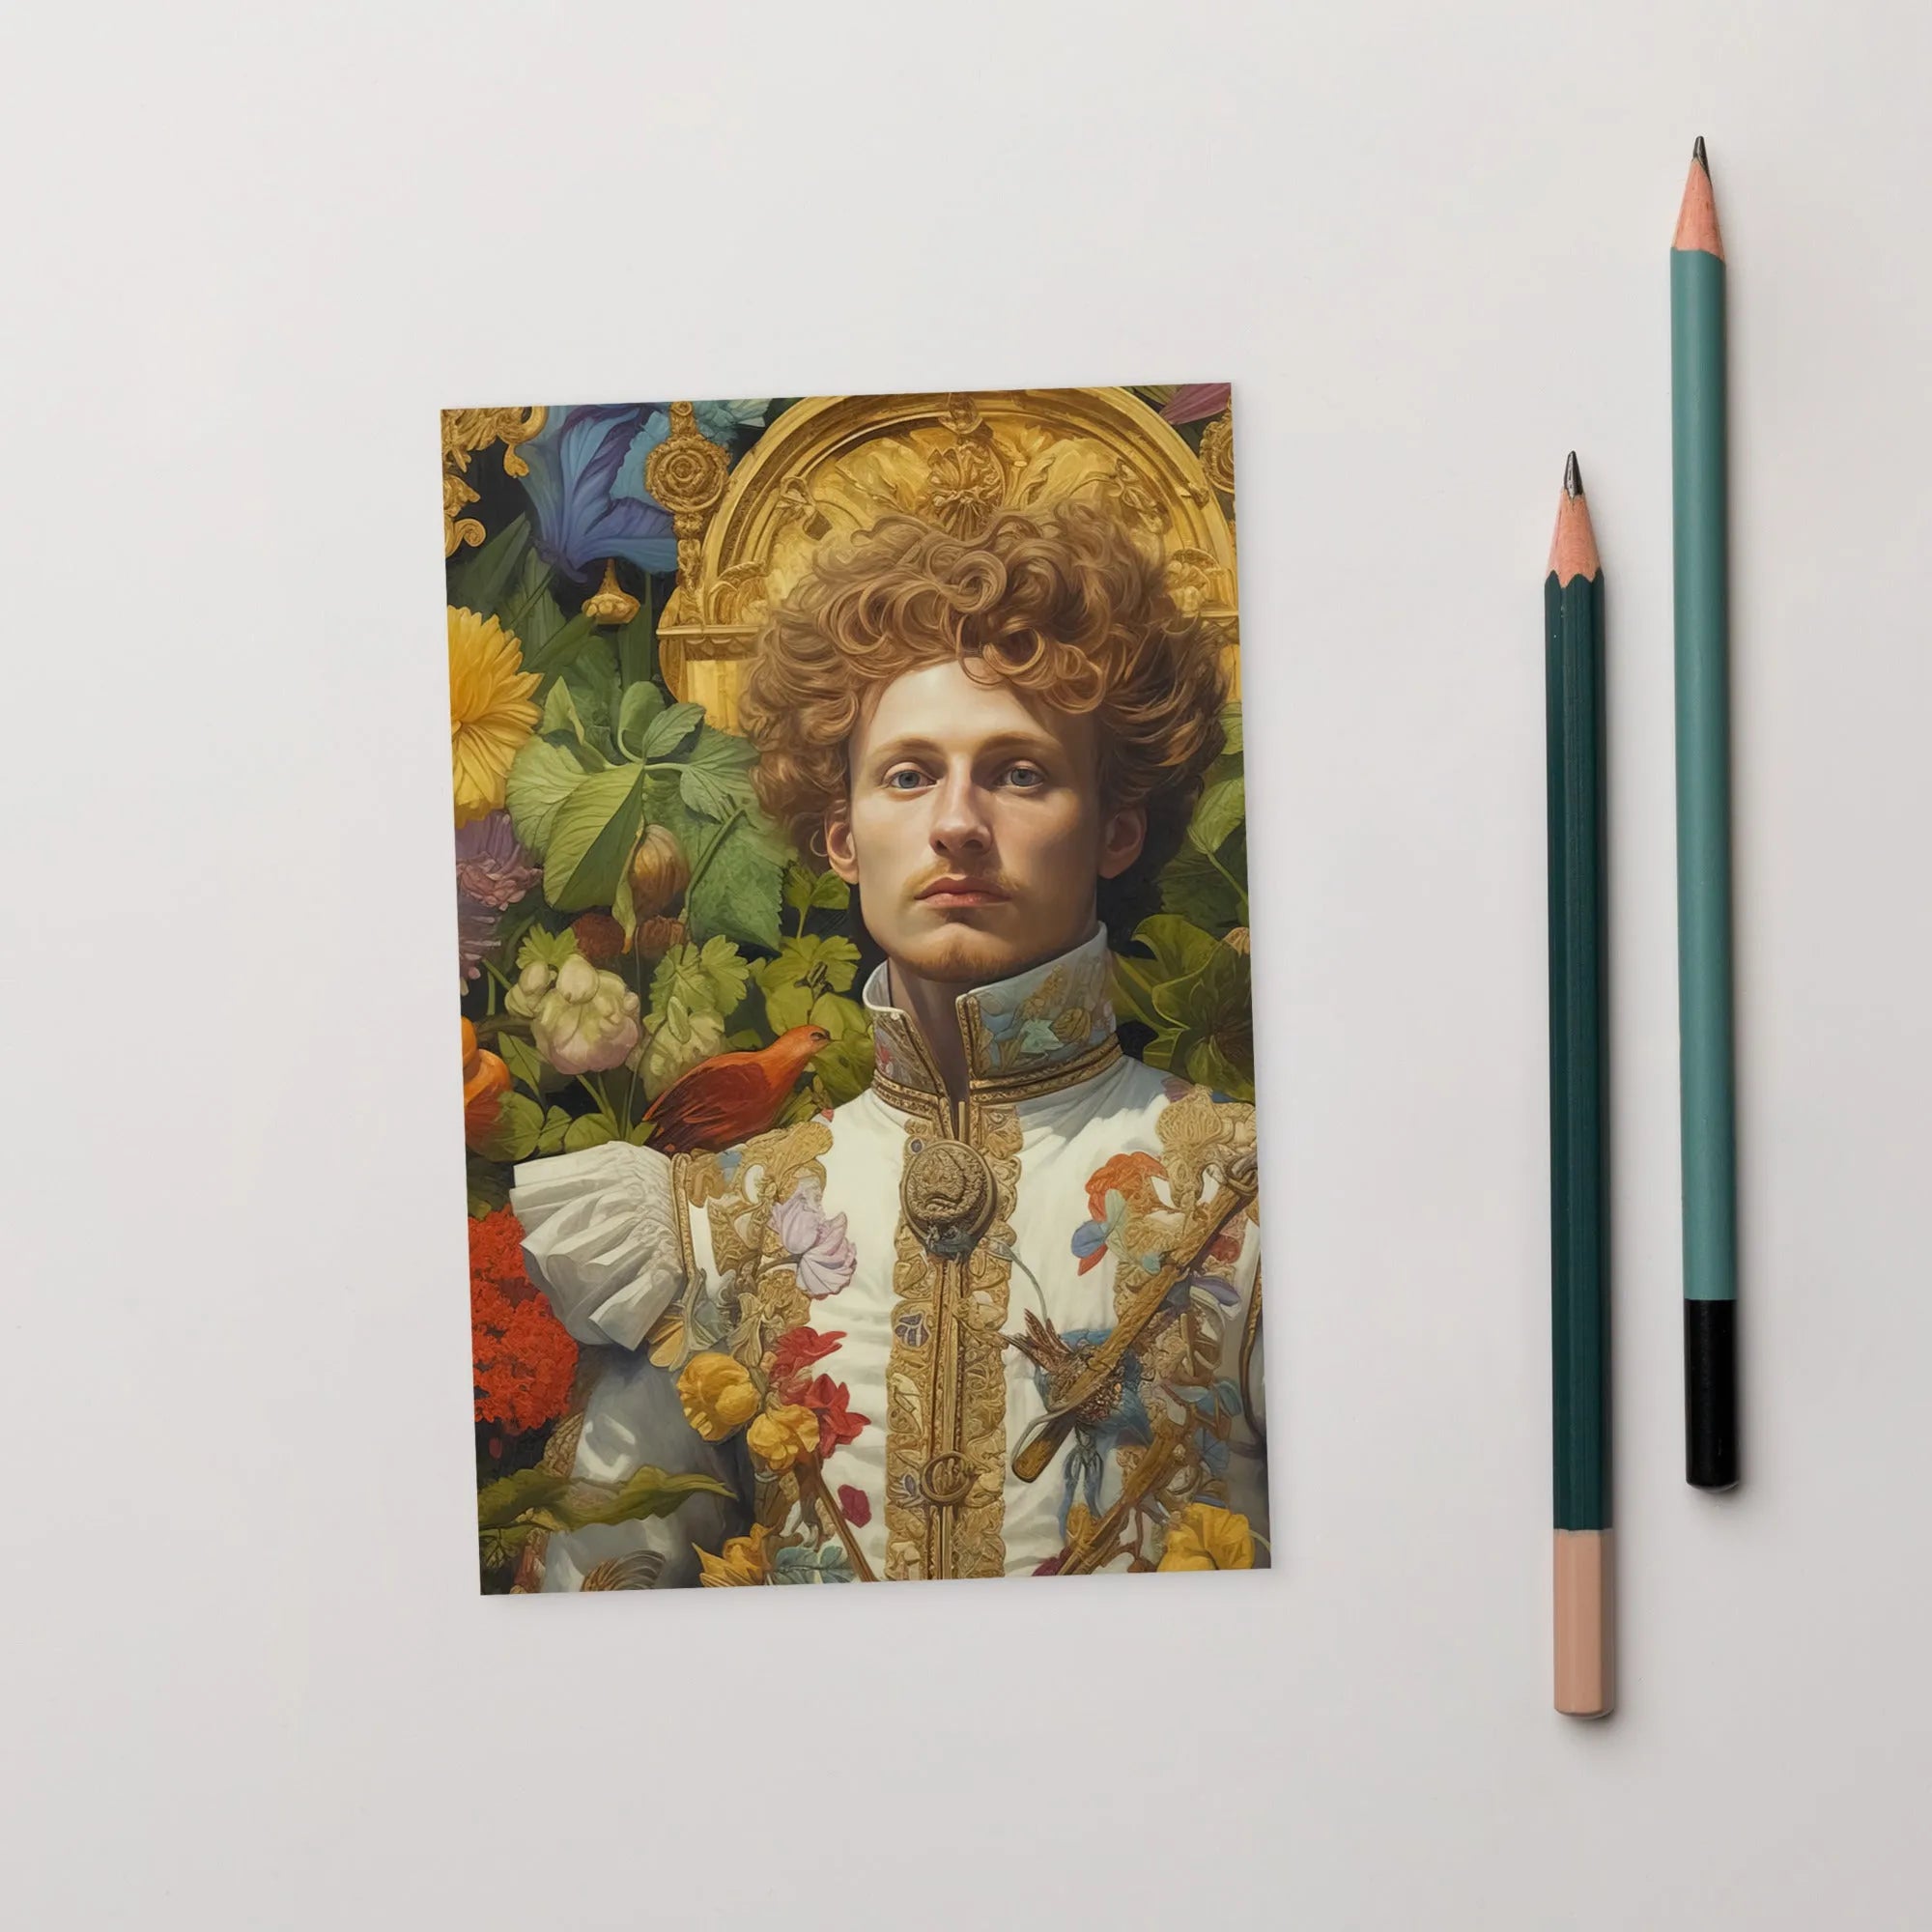 Prince Carlisle - Gay Uk Royalty English Renaissance Print - 4’x6’ - Posters Prints & Visual Artwork - Aesthetic Art